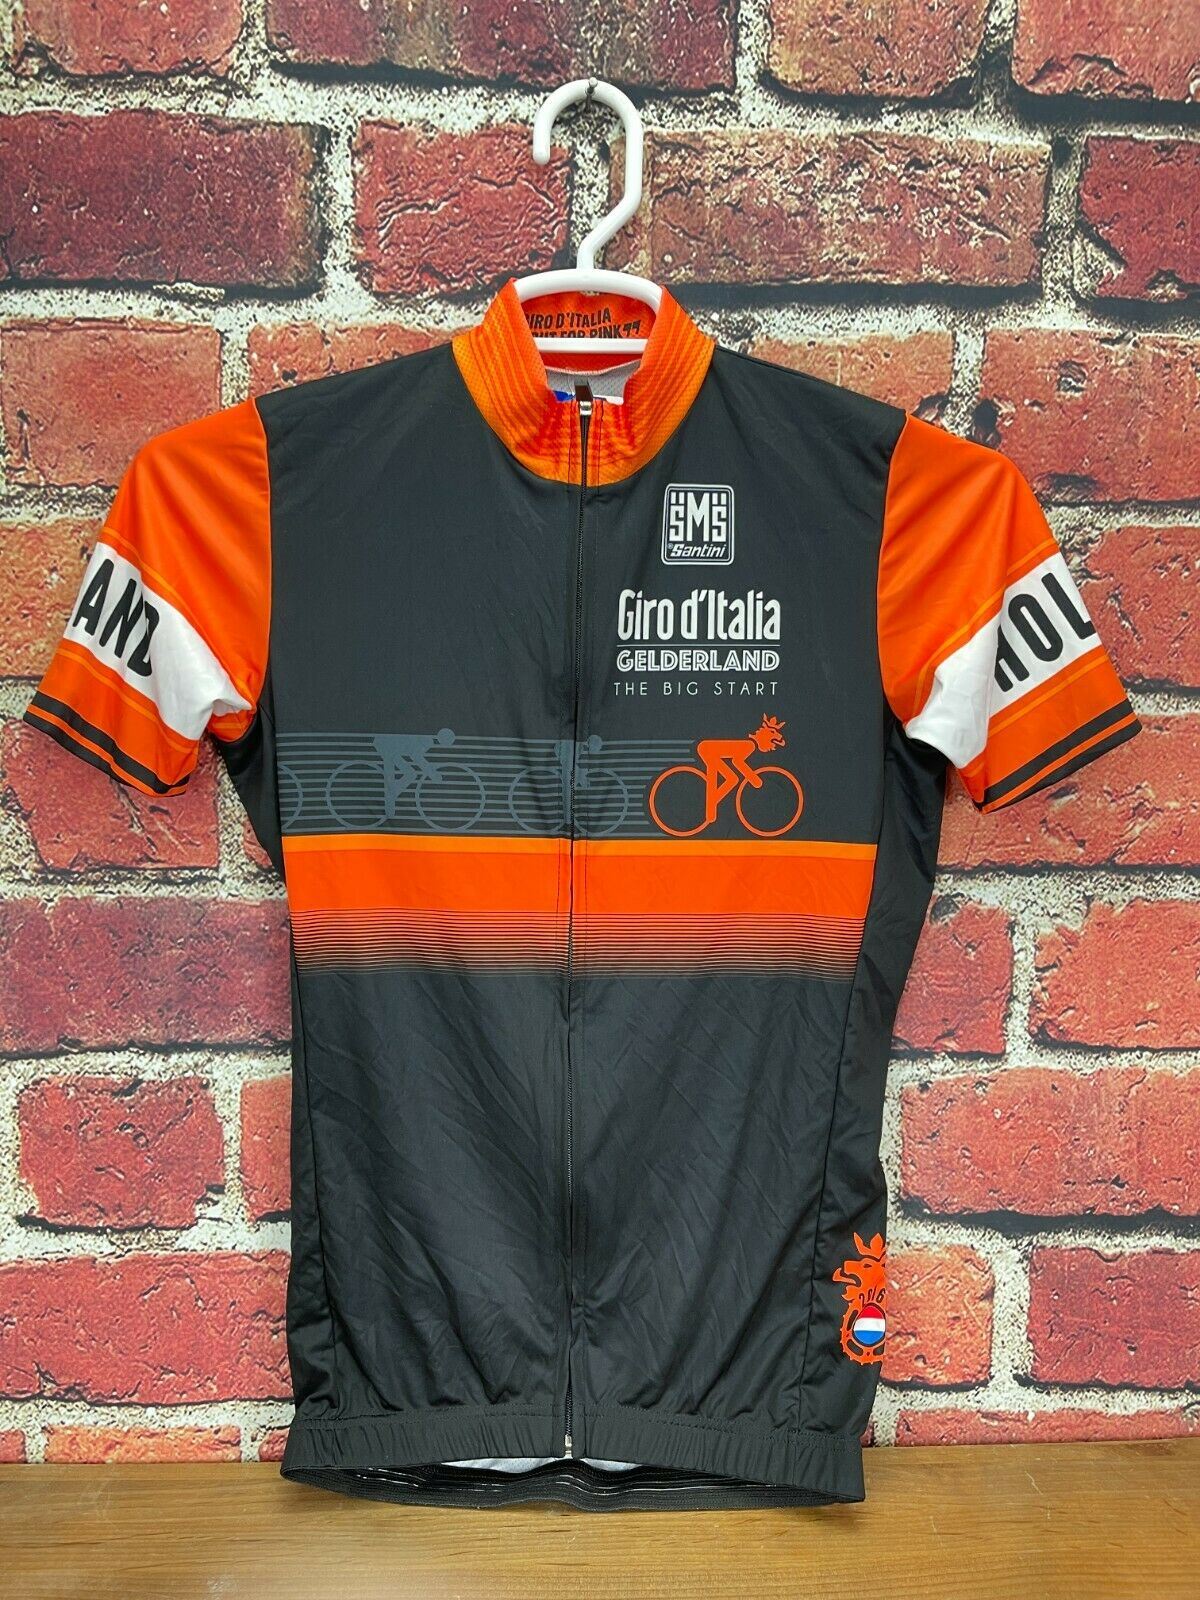 New! Sms Santini Giro D'Italia 2016 Large Mens Short Sleeve Cycling Jersey